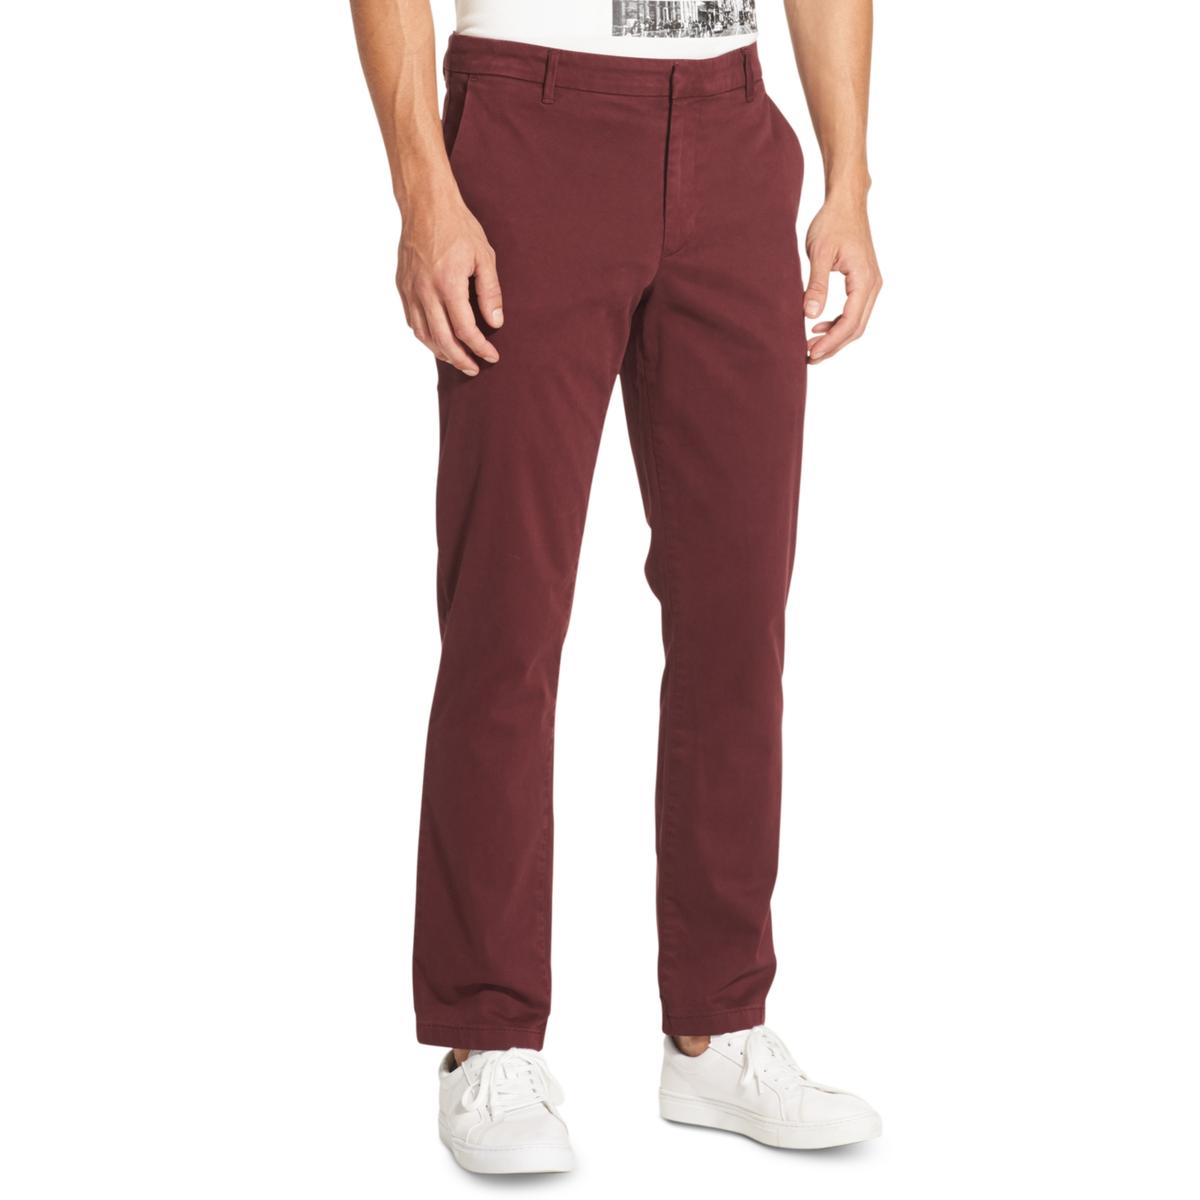 DKNY Mens Pants Red 30/30 97% Cotton/3% Elastane BHFO 6632 | eBay